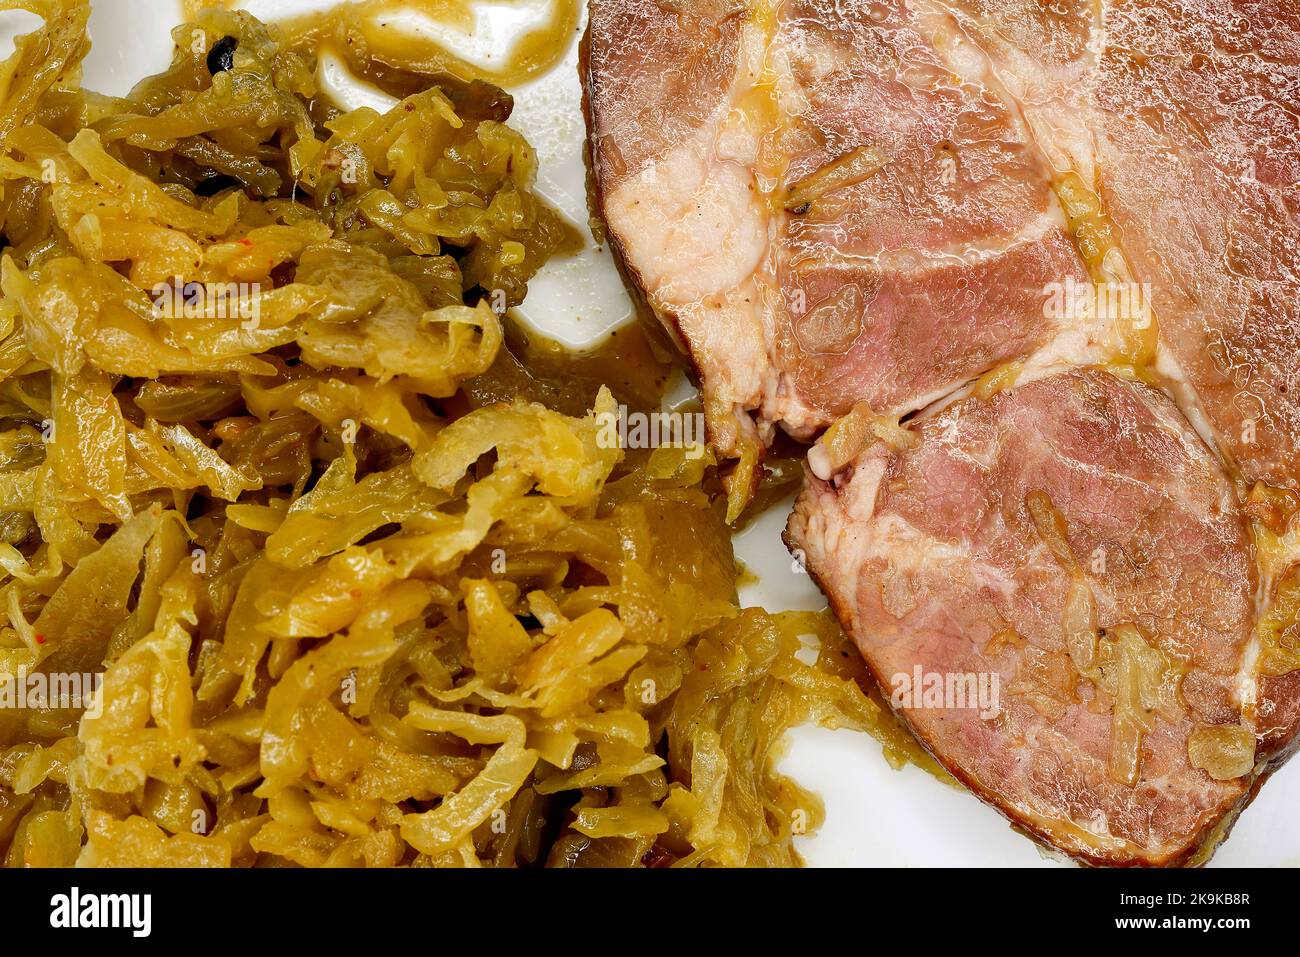 German deli Sauerkraut with pork meat Stock Photo